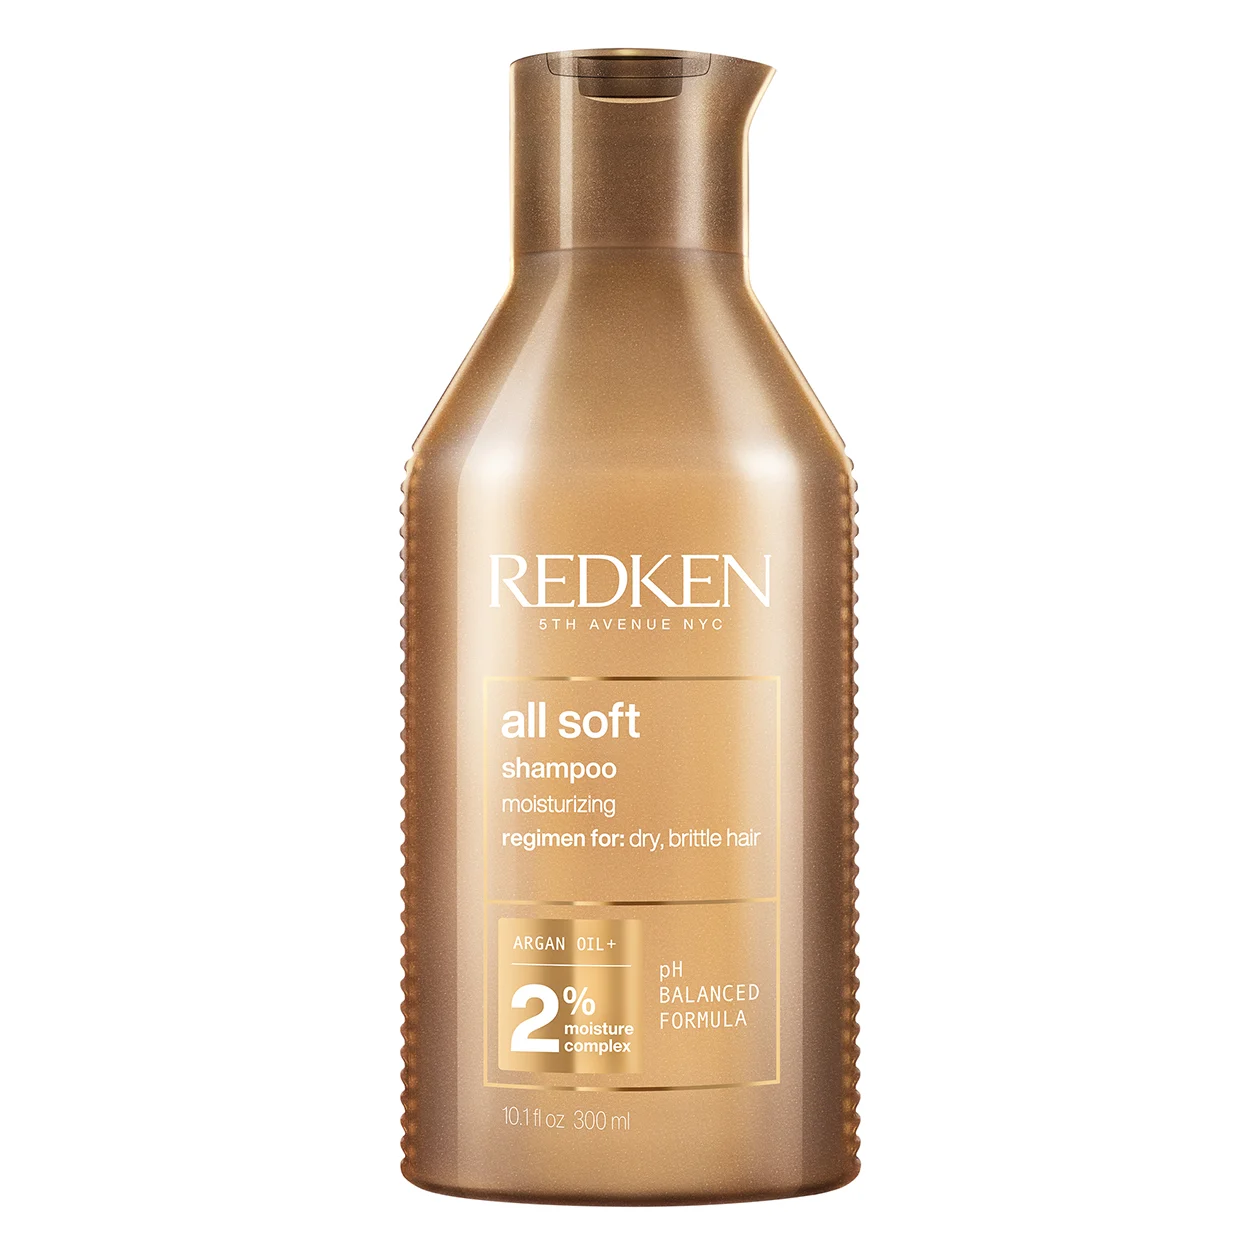 A tied FEMMENORDIC's choice in the Redken vs Nexxus shampoo comparison, Redken All Soft Shampoo